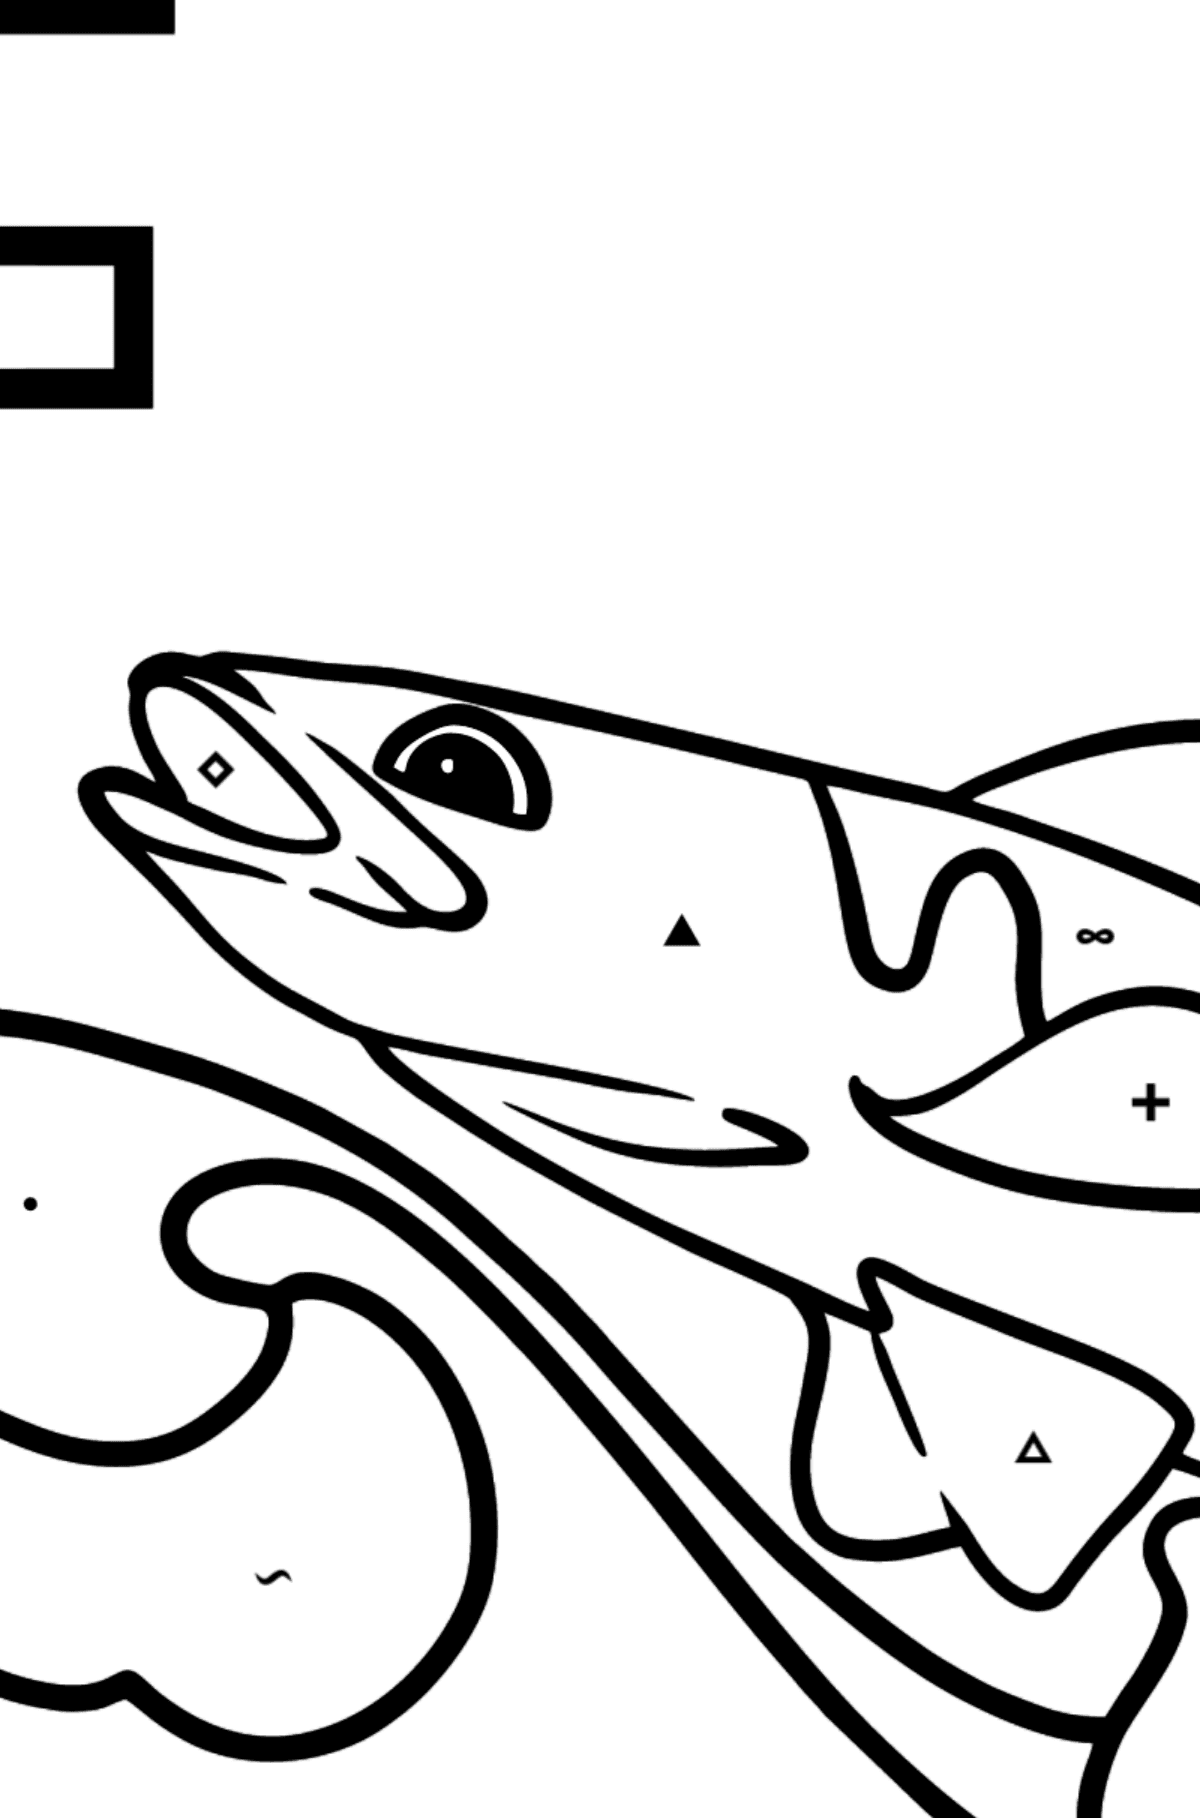 Раскраска Буква F Английский алфавит - FISH - По Символам для Детей